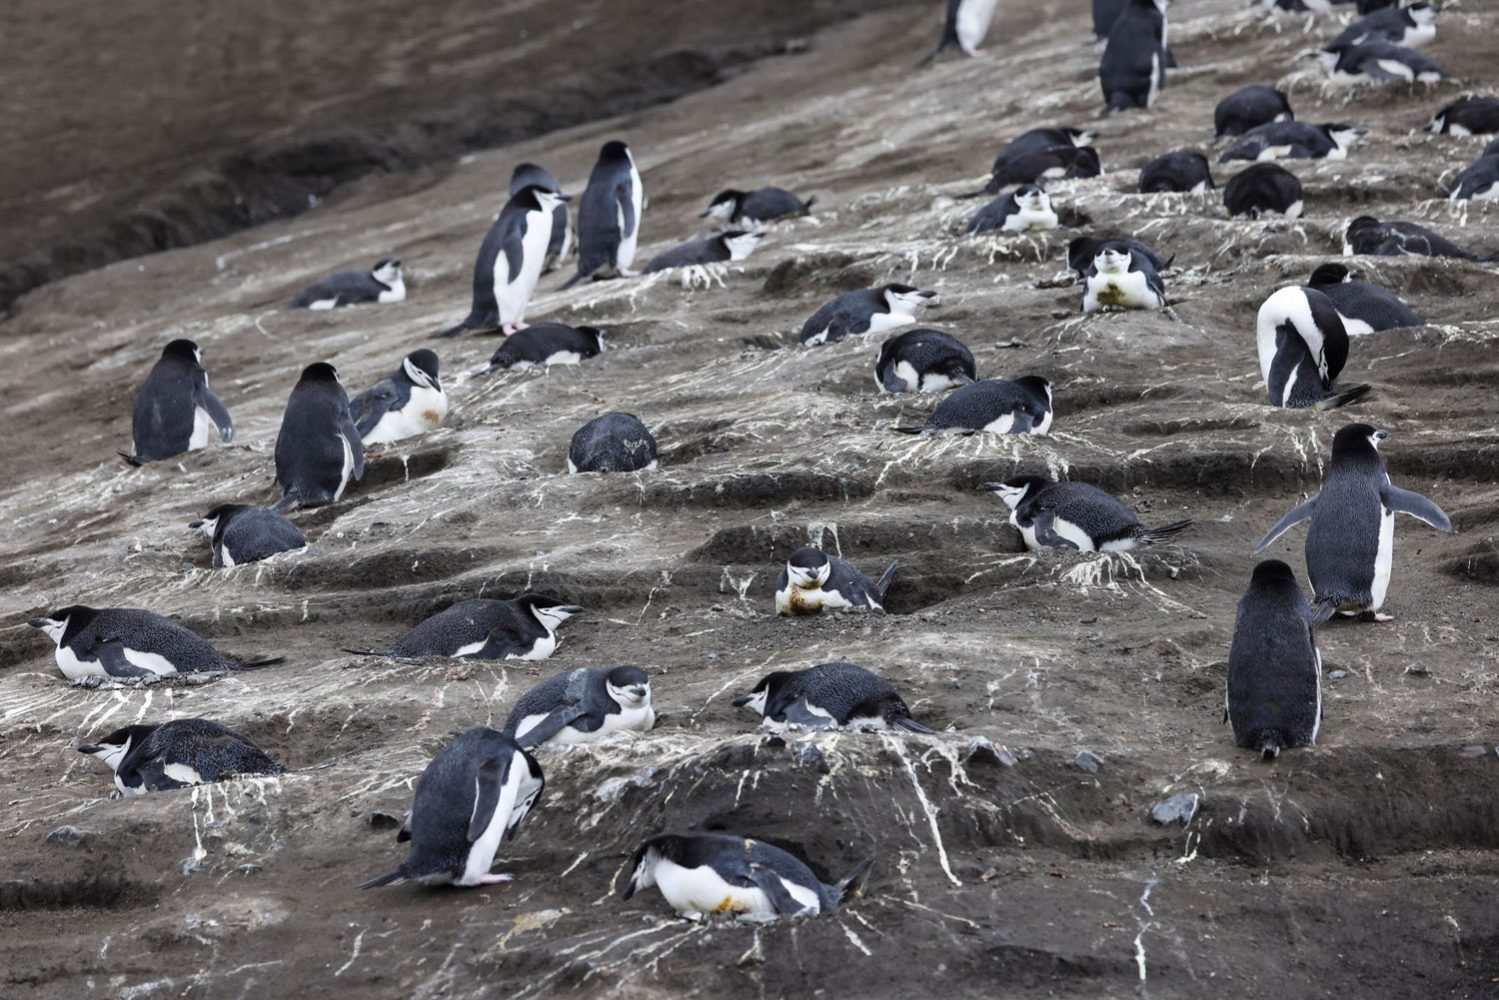 Royal Navy drones penguins